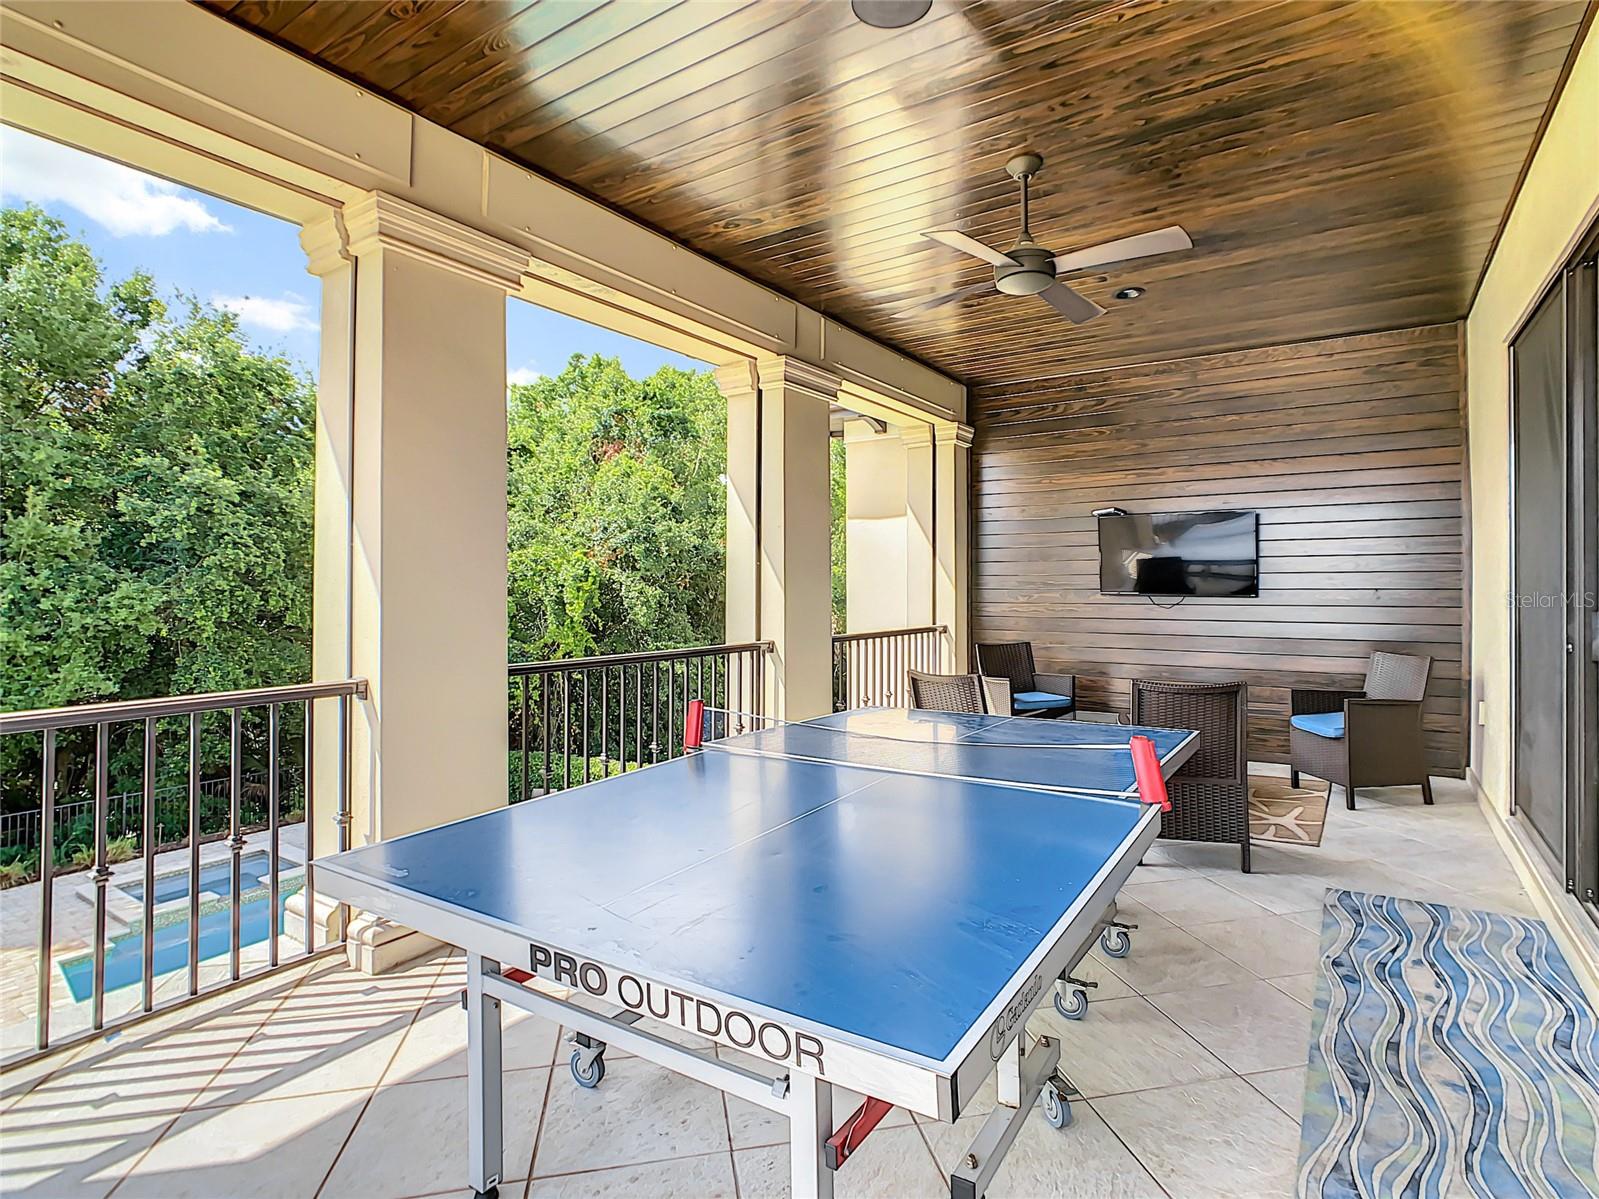 Slide show image of the Orlando Florida Home for Sale 68